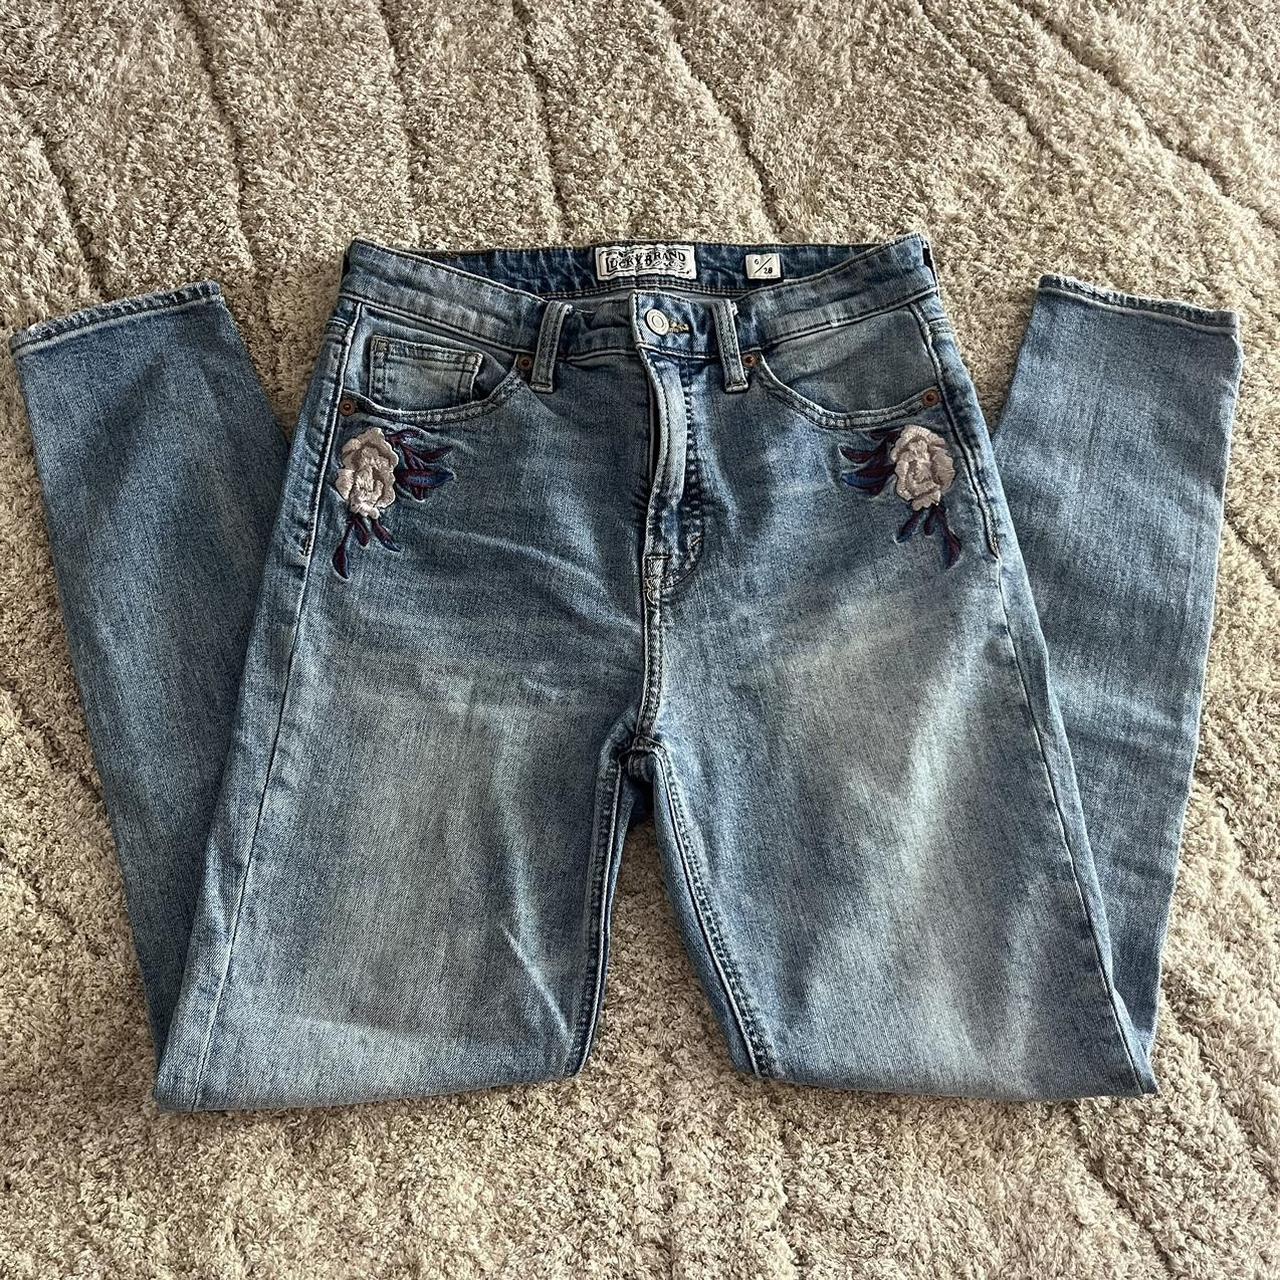 Lucky Brand Skinny Jeans Button Fly Light Wash - Depop